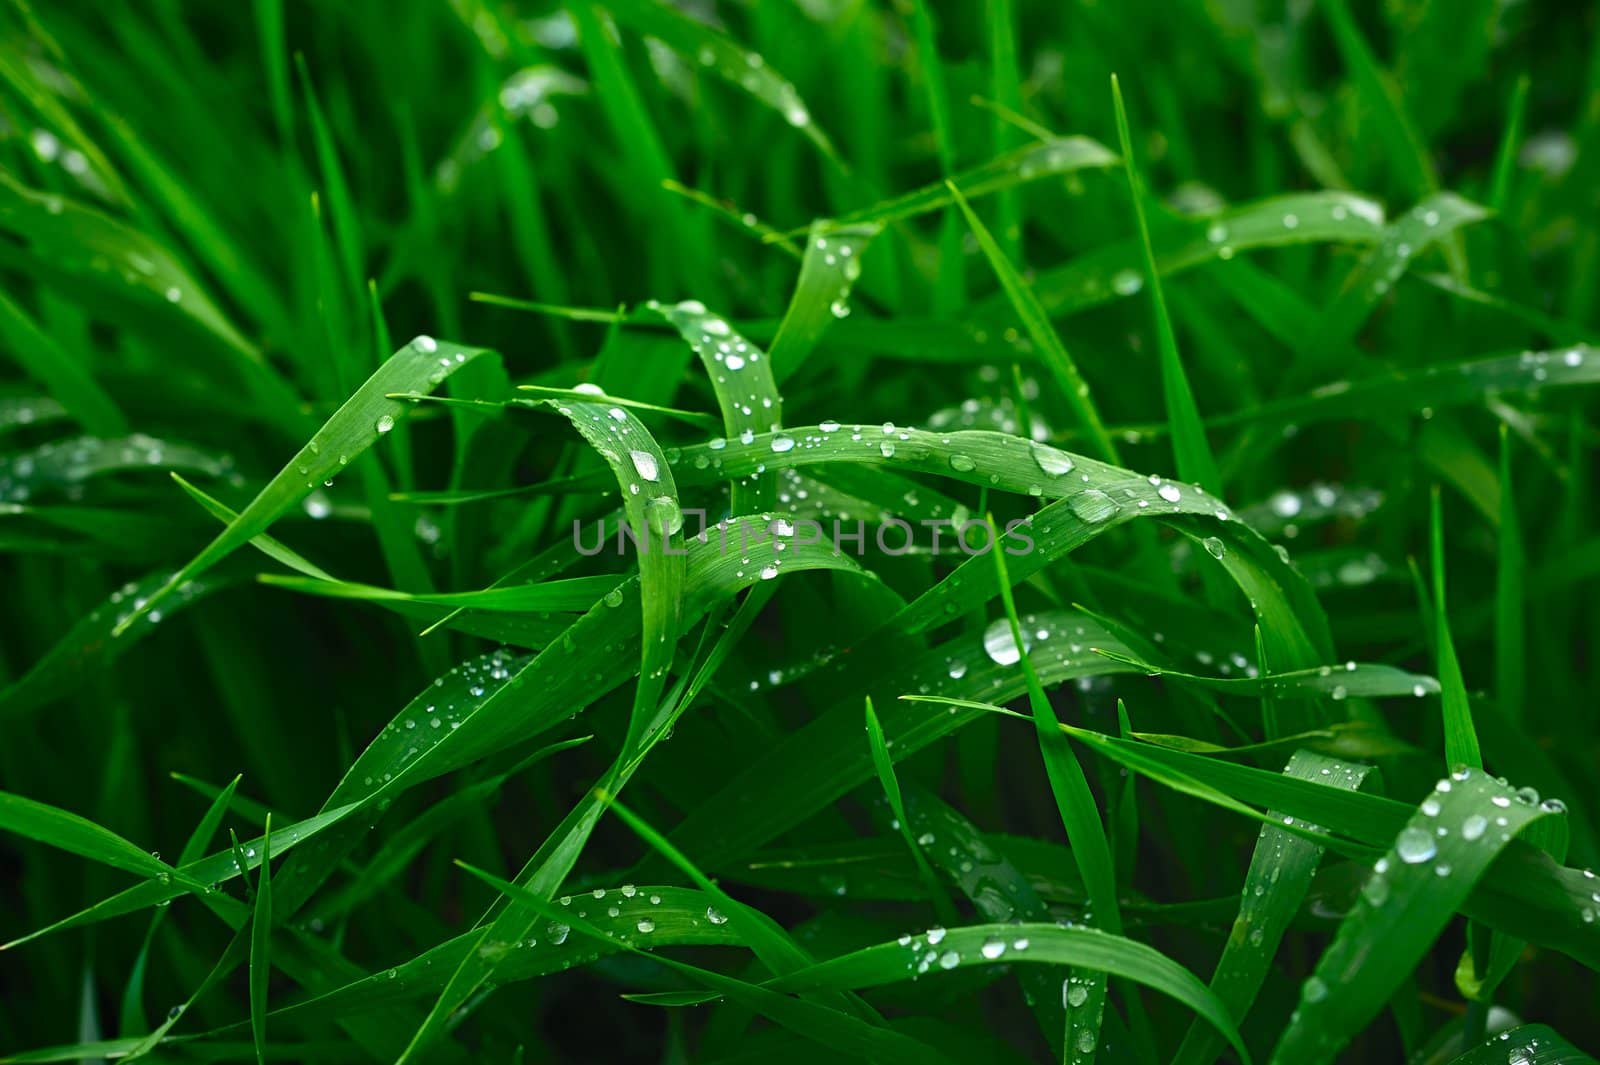 Grass after a rain by styf22